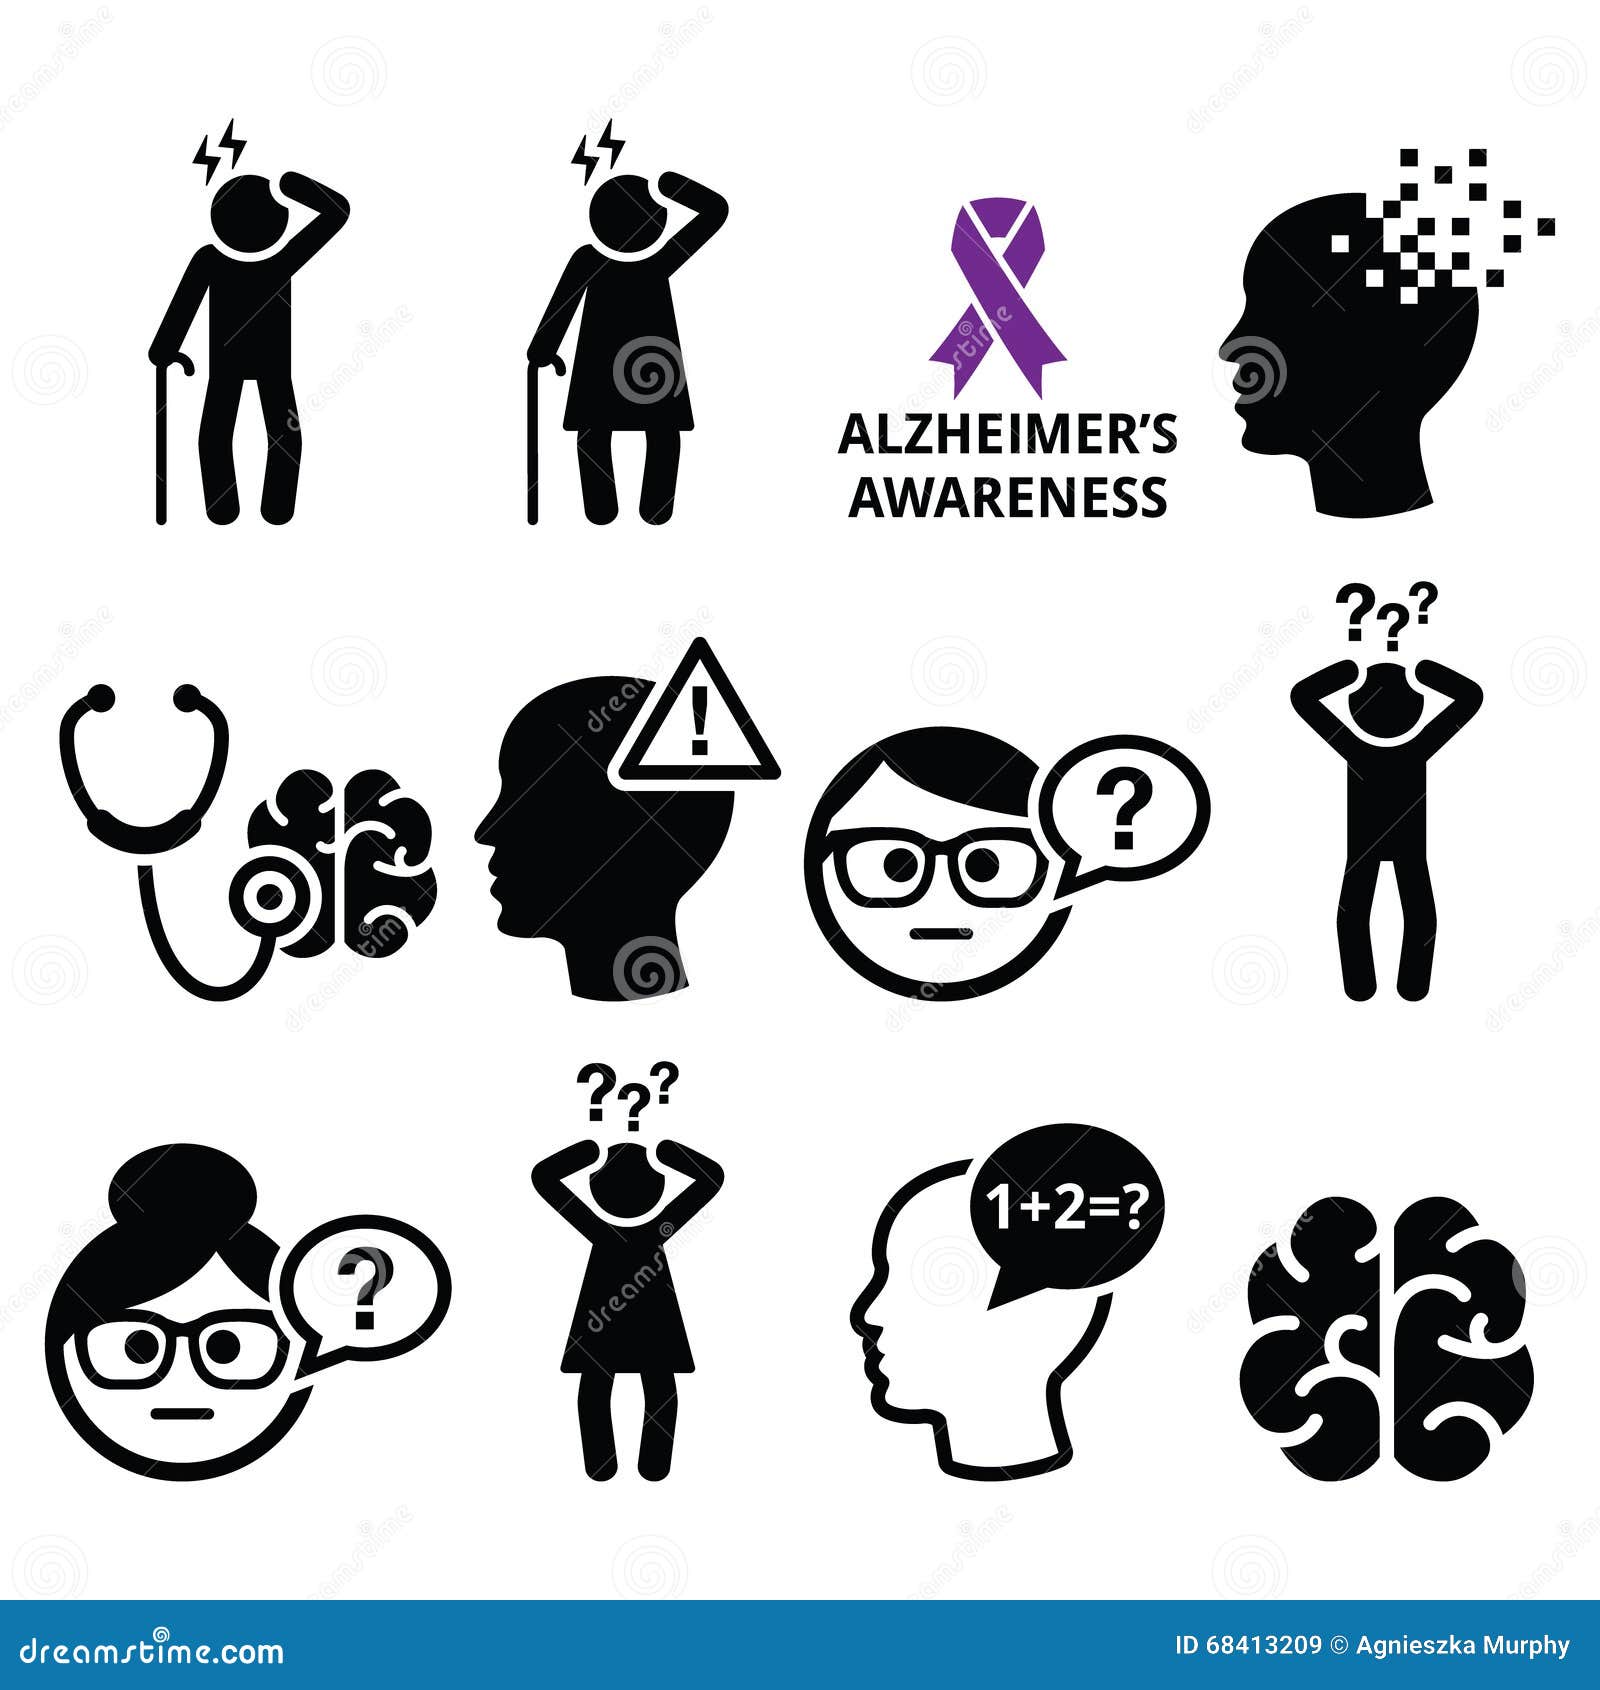 seniors health - alzheimer's disease and dementia, memory loss icons set